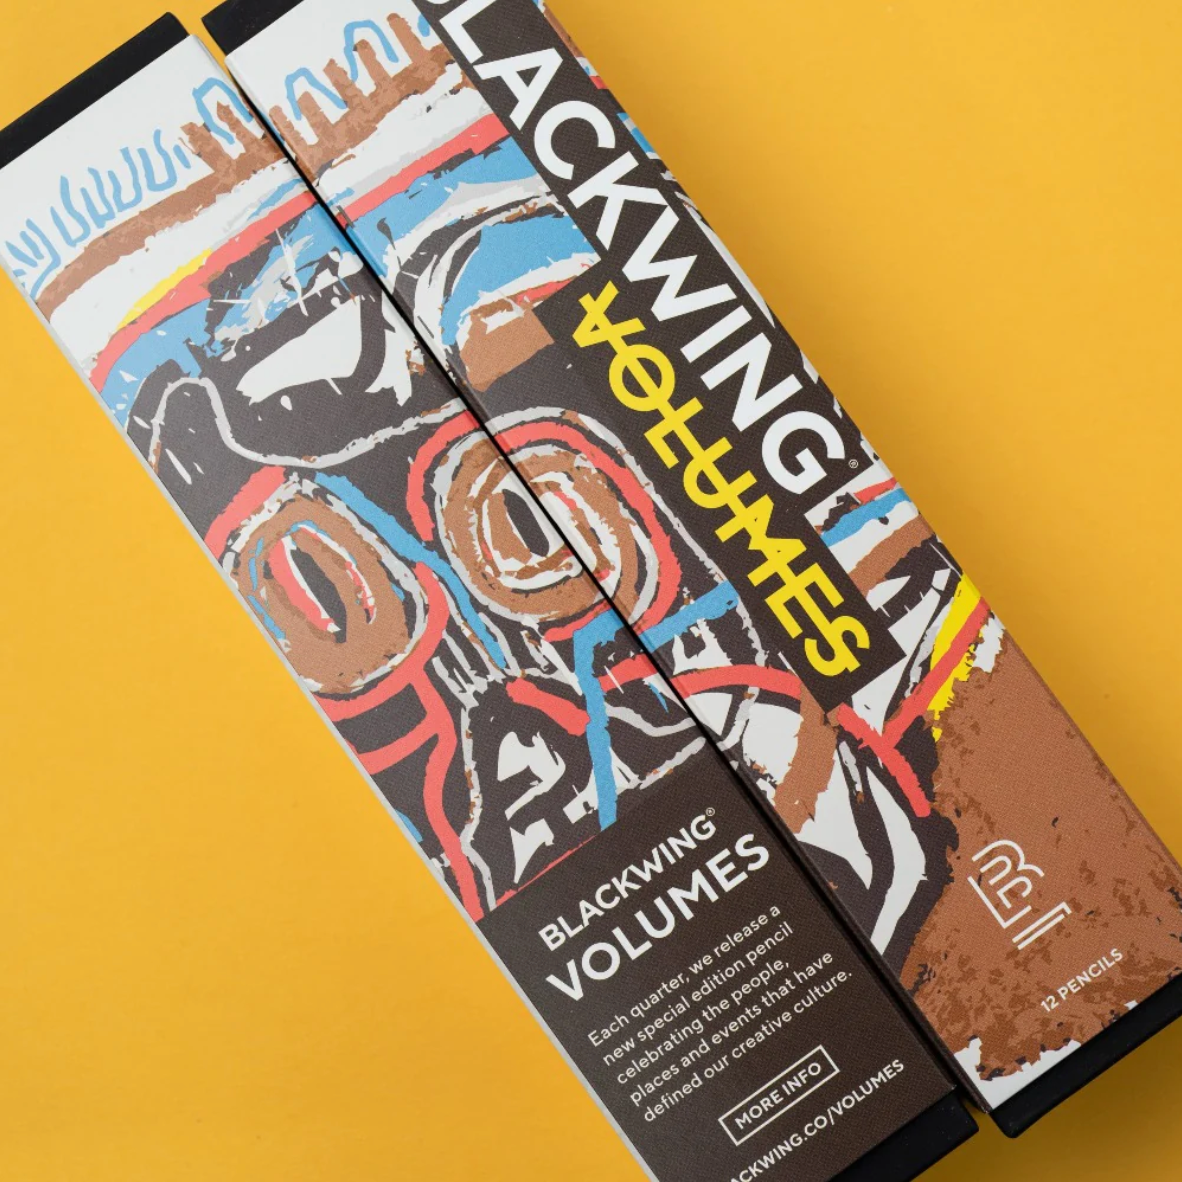 Blackwing Vol. 57 – Basquiat (ed. limitada)